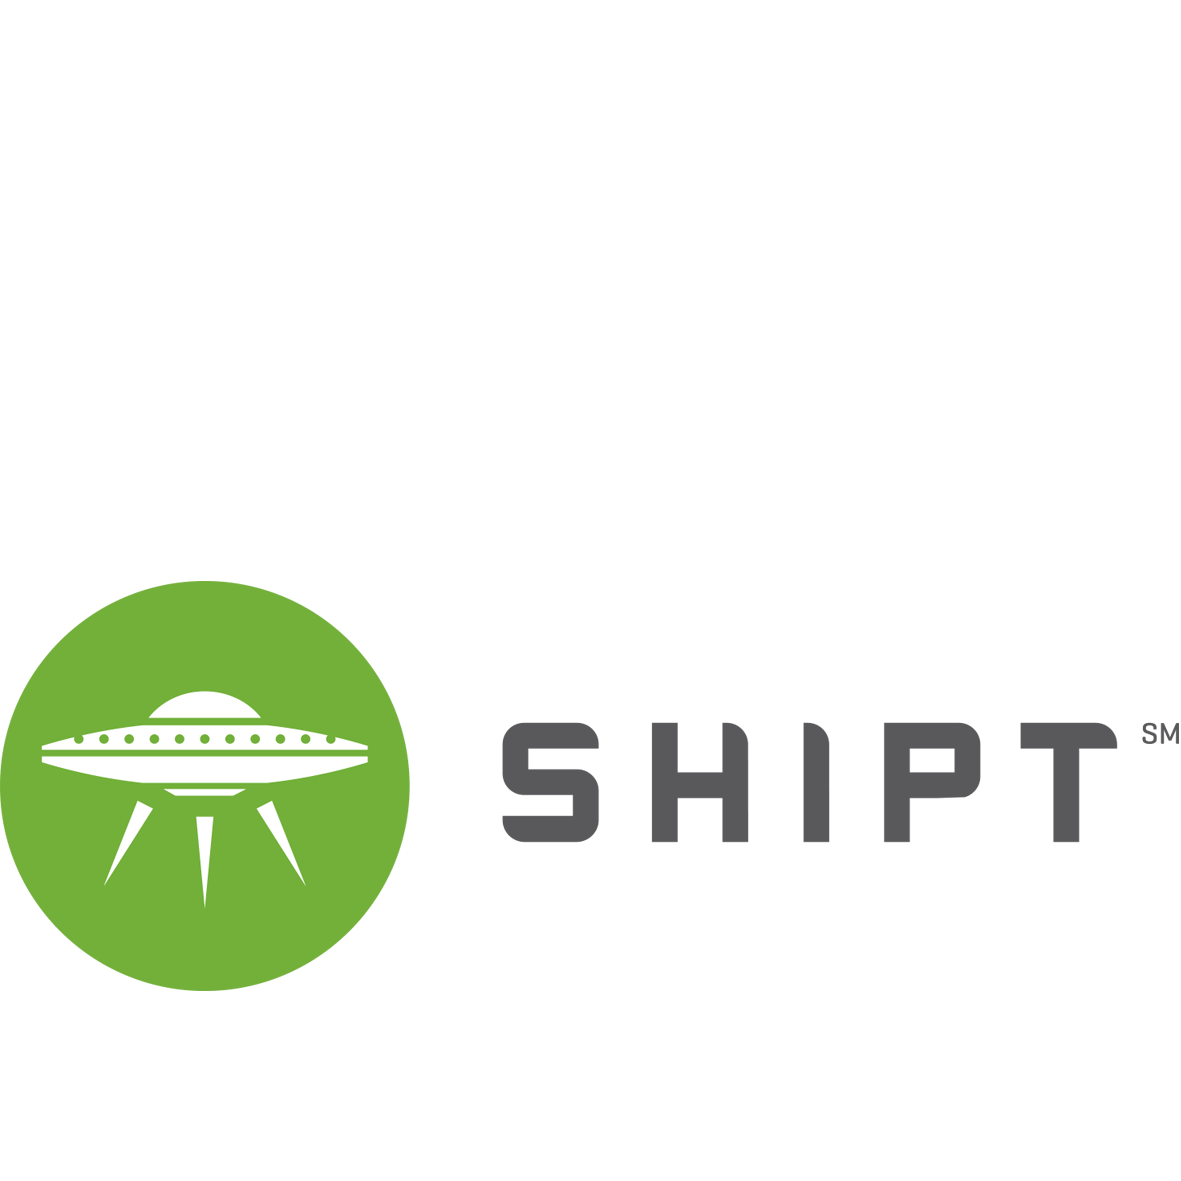 Shipt Logo - Shipt - 2ndVote